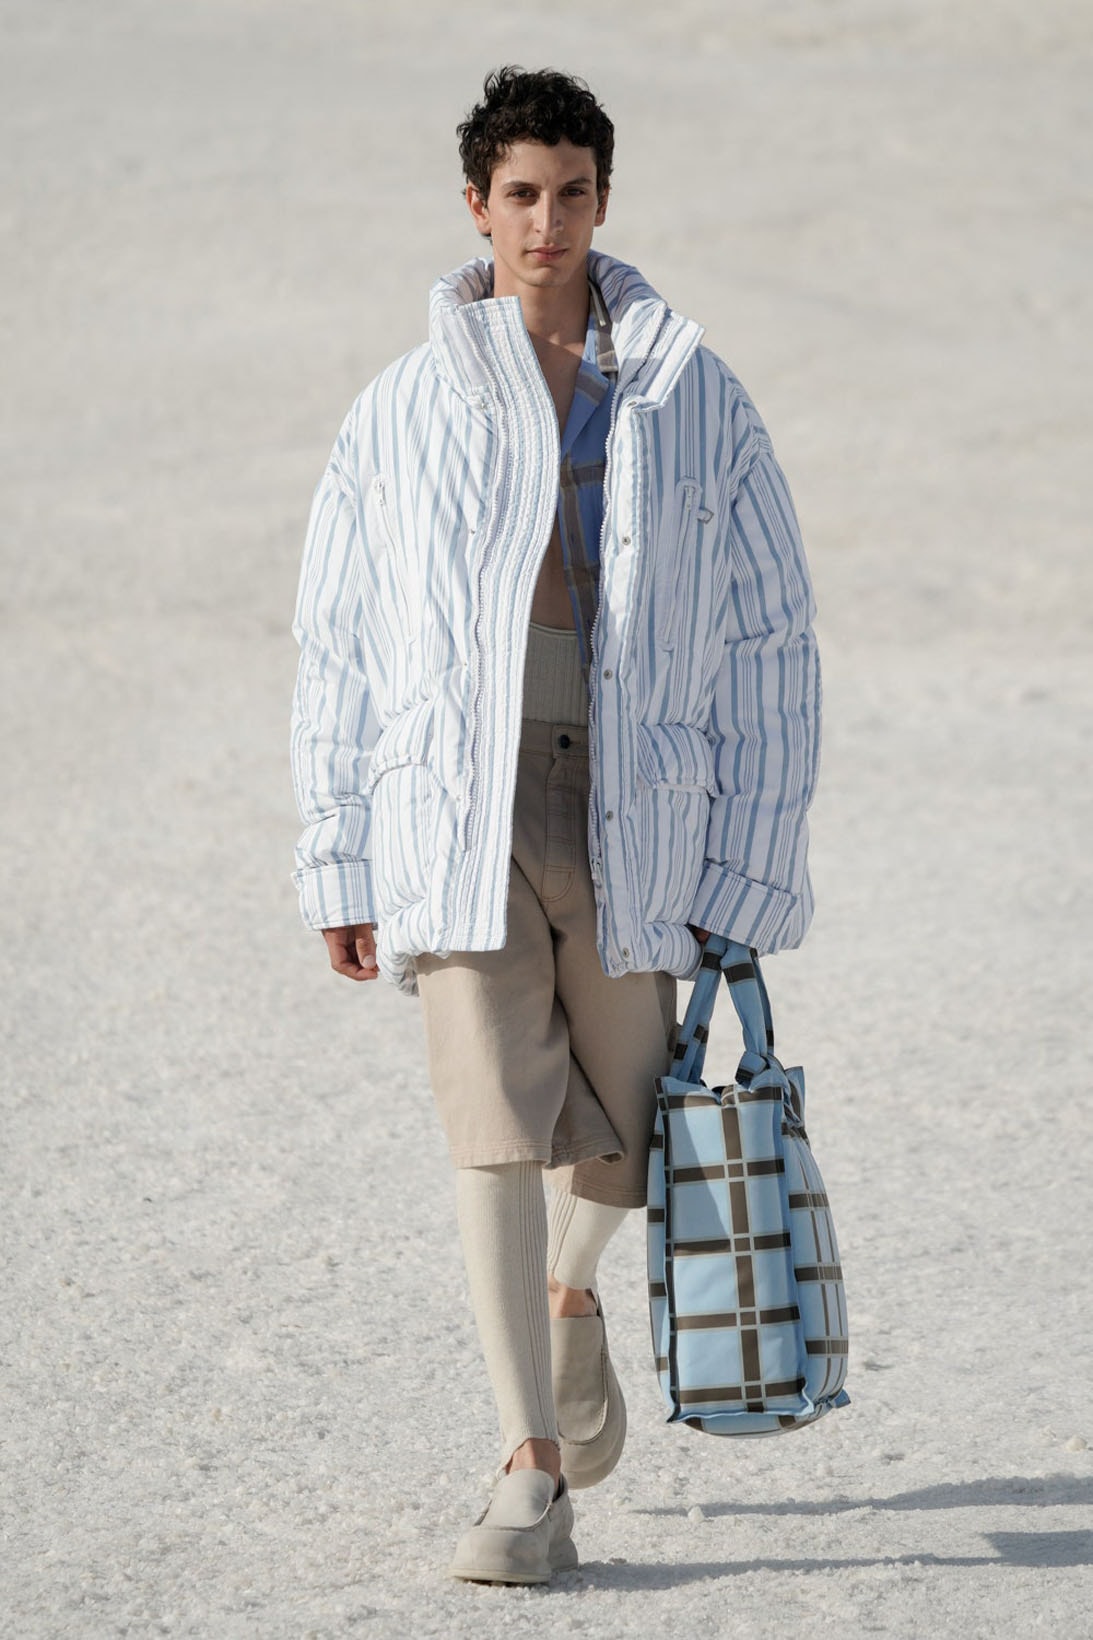 Jacquemus “Le Papier” Fall 2022 Presents a Vision of Tonal Elegance Fashion